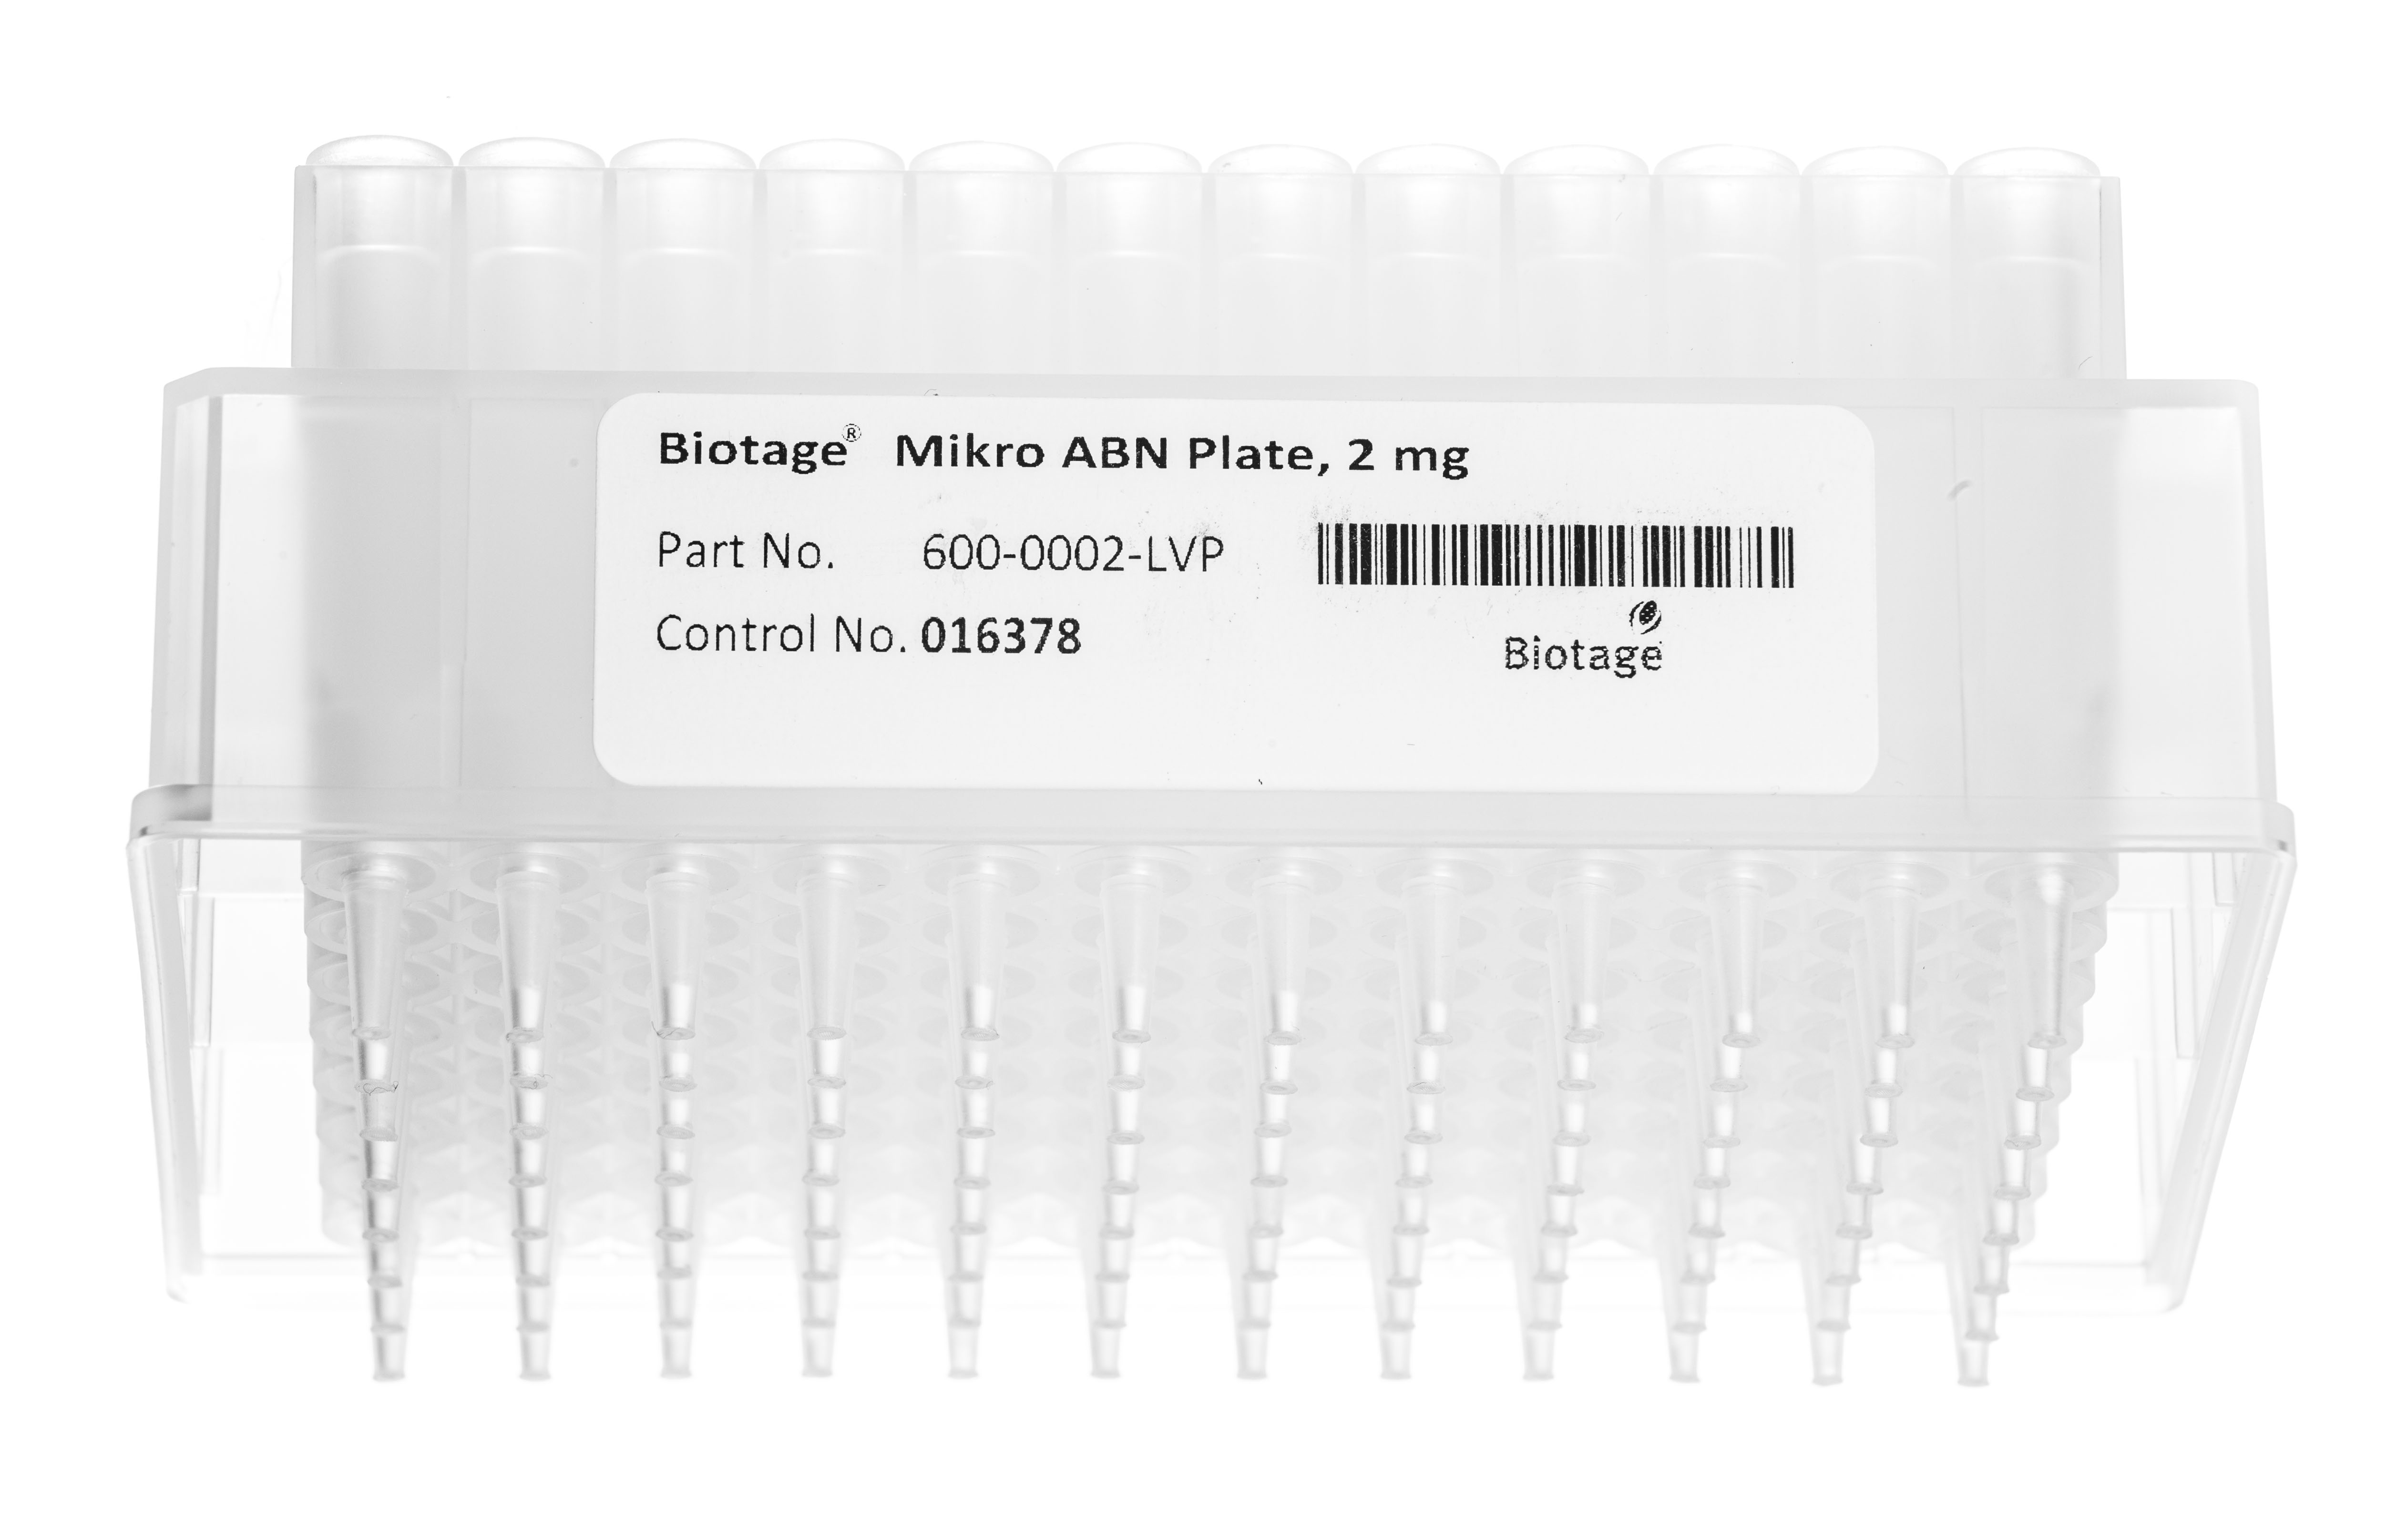 Biotage Mikro plate 600-002-LVPz